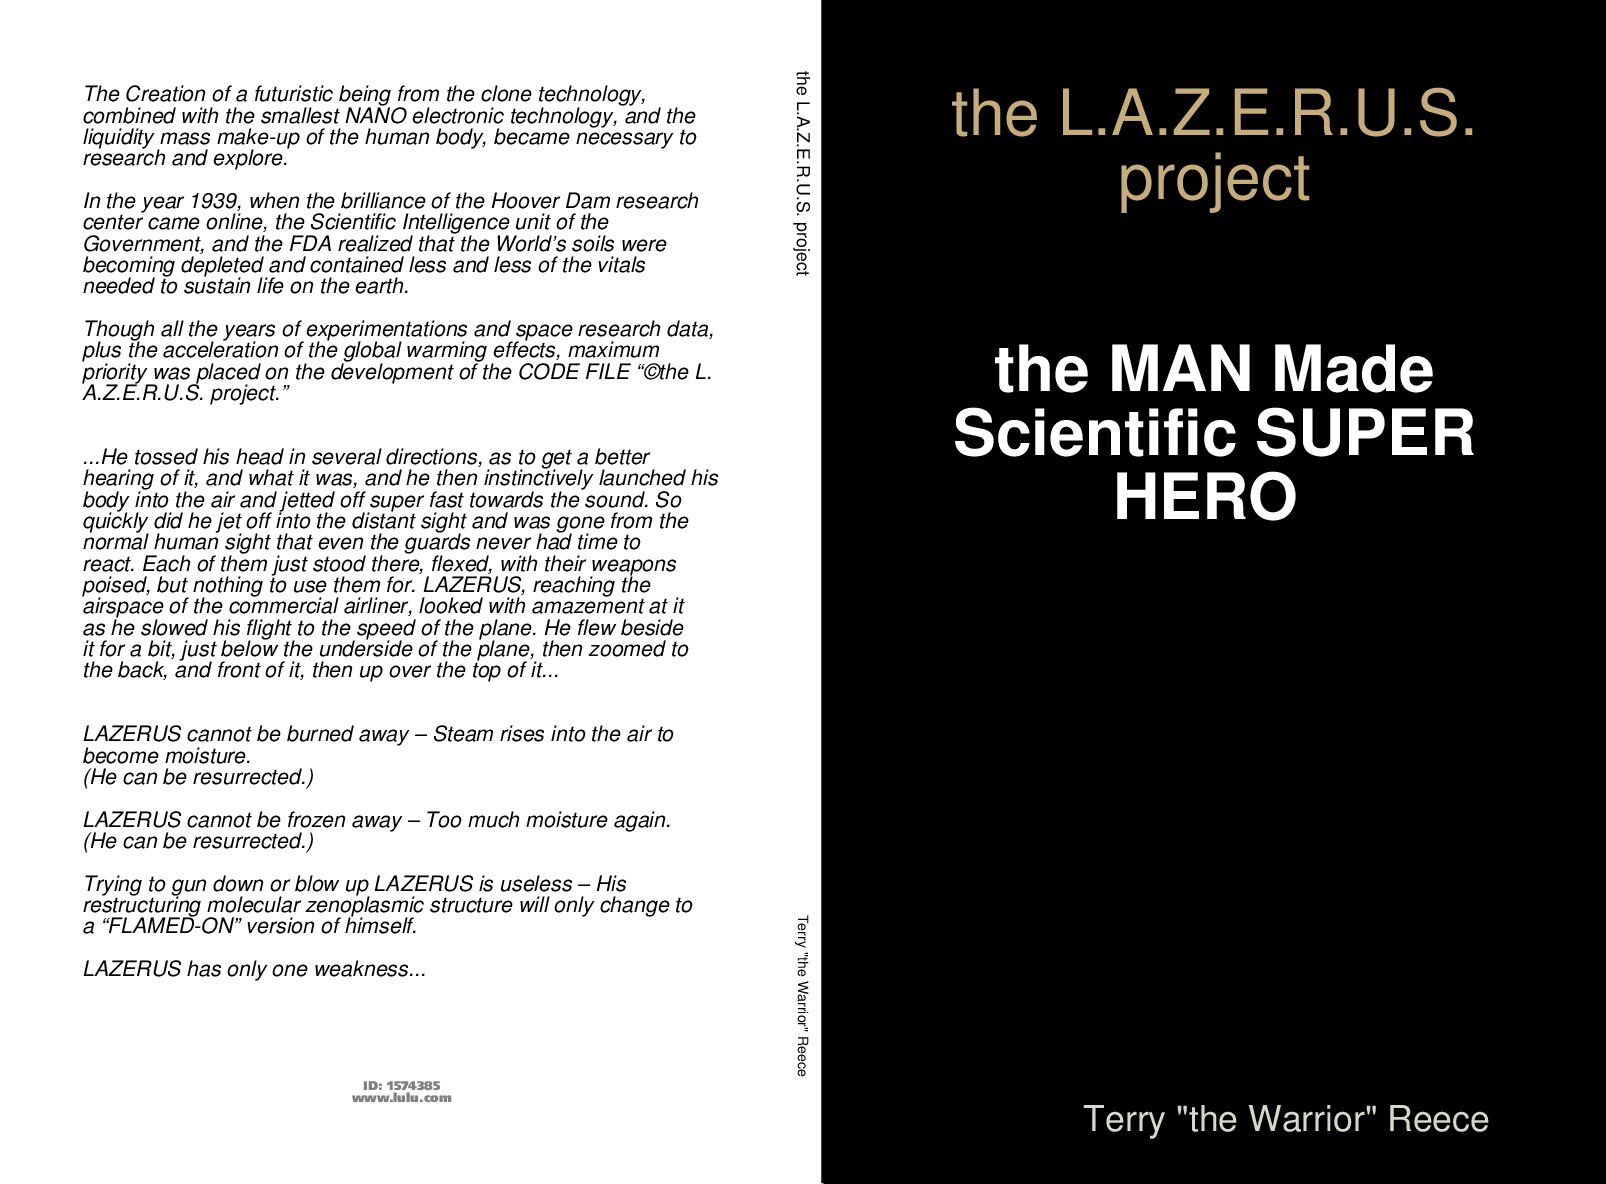 Made in Nevada ©The L.A.Z.E.R.U.S. project-The Man-Made Super Hero (THE NOVEL)